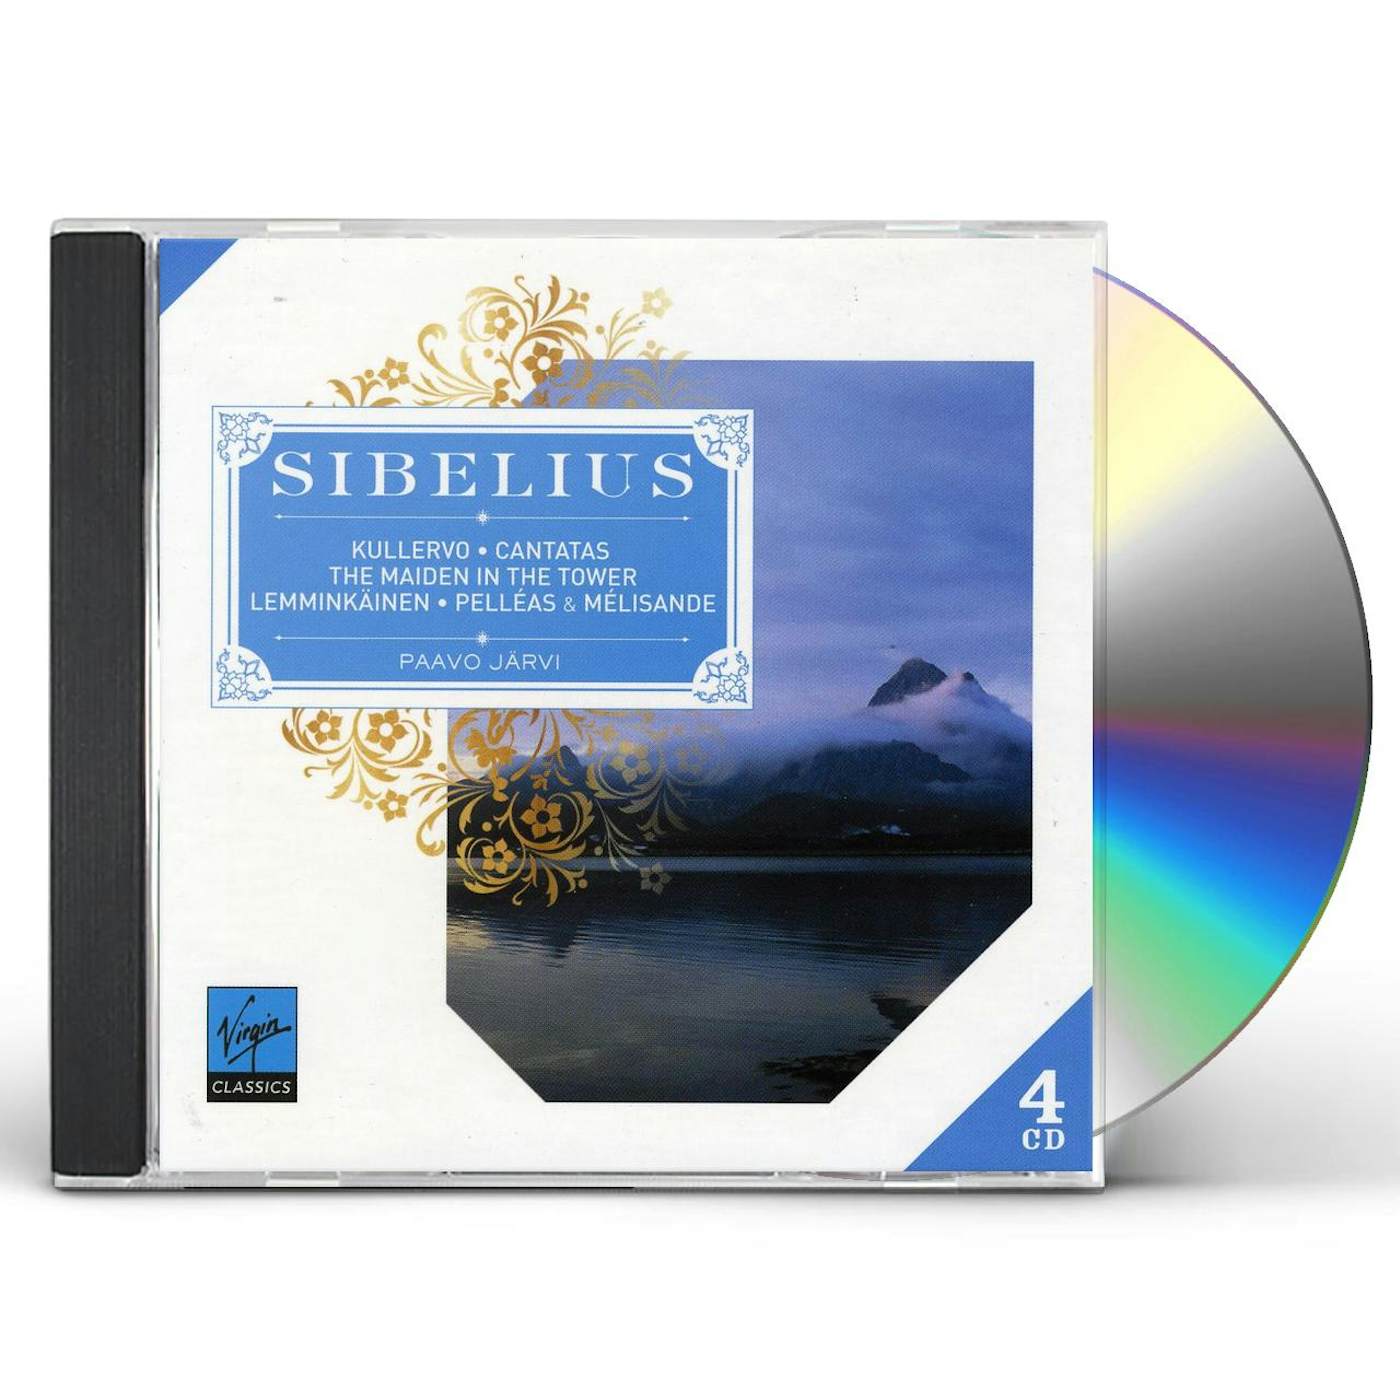 Sibelius KULLERVO CANTATAS THE MAIDEN CD